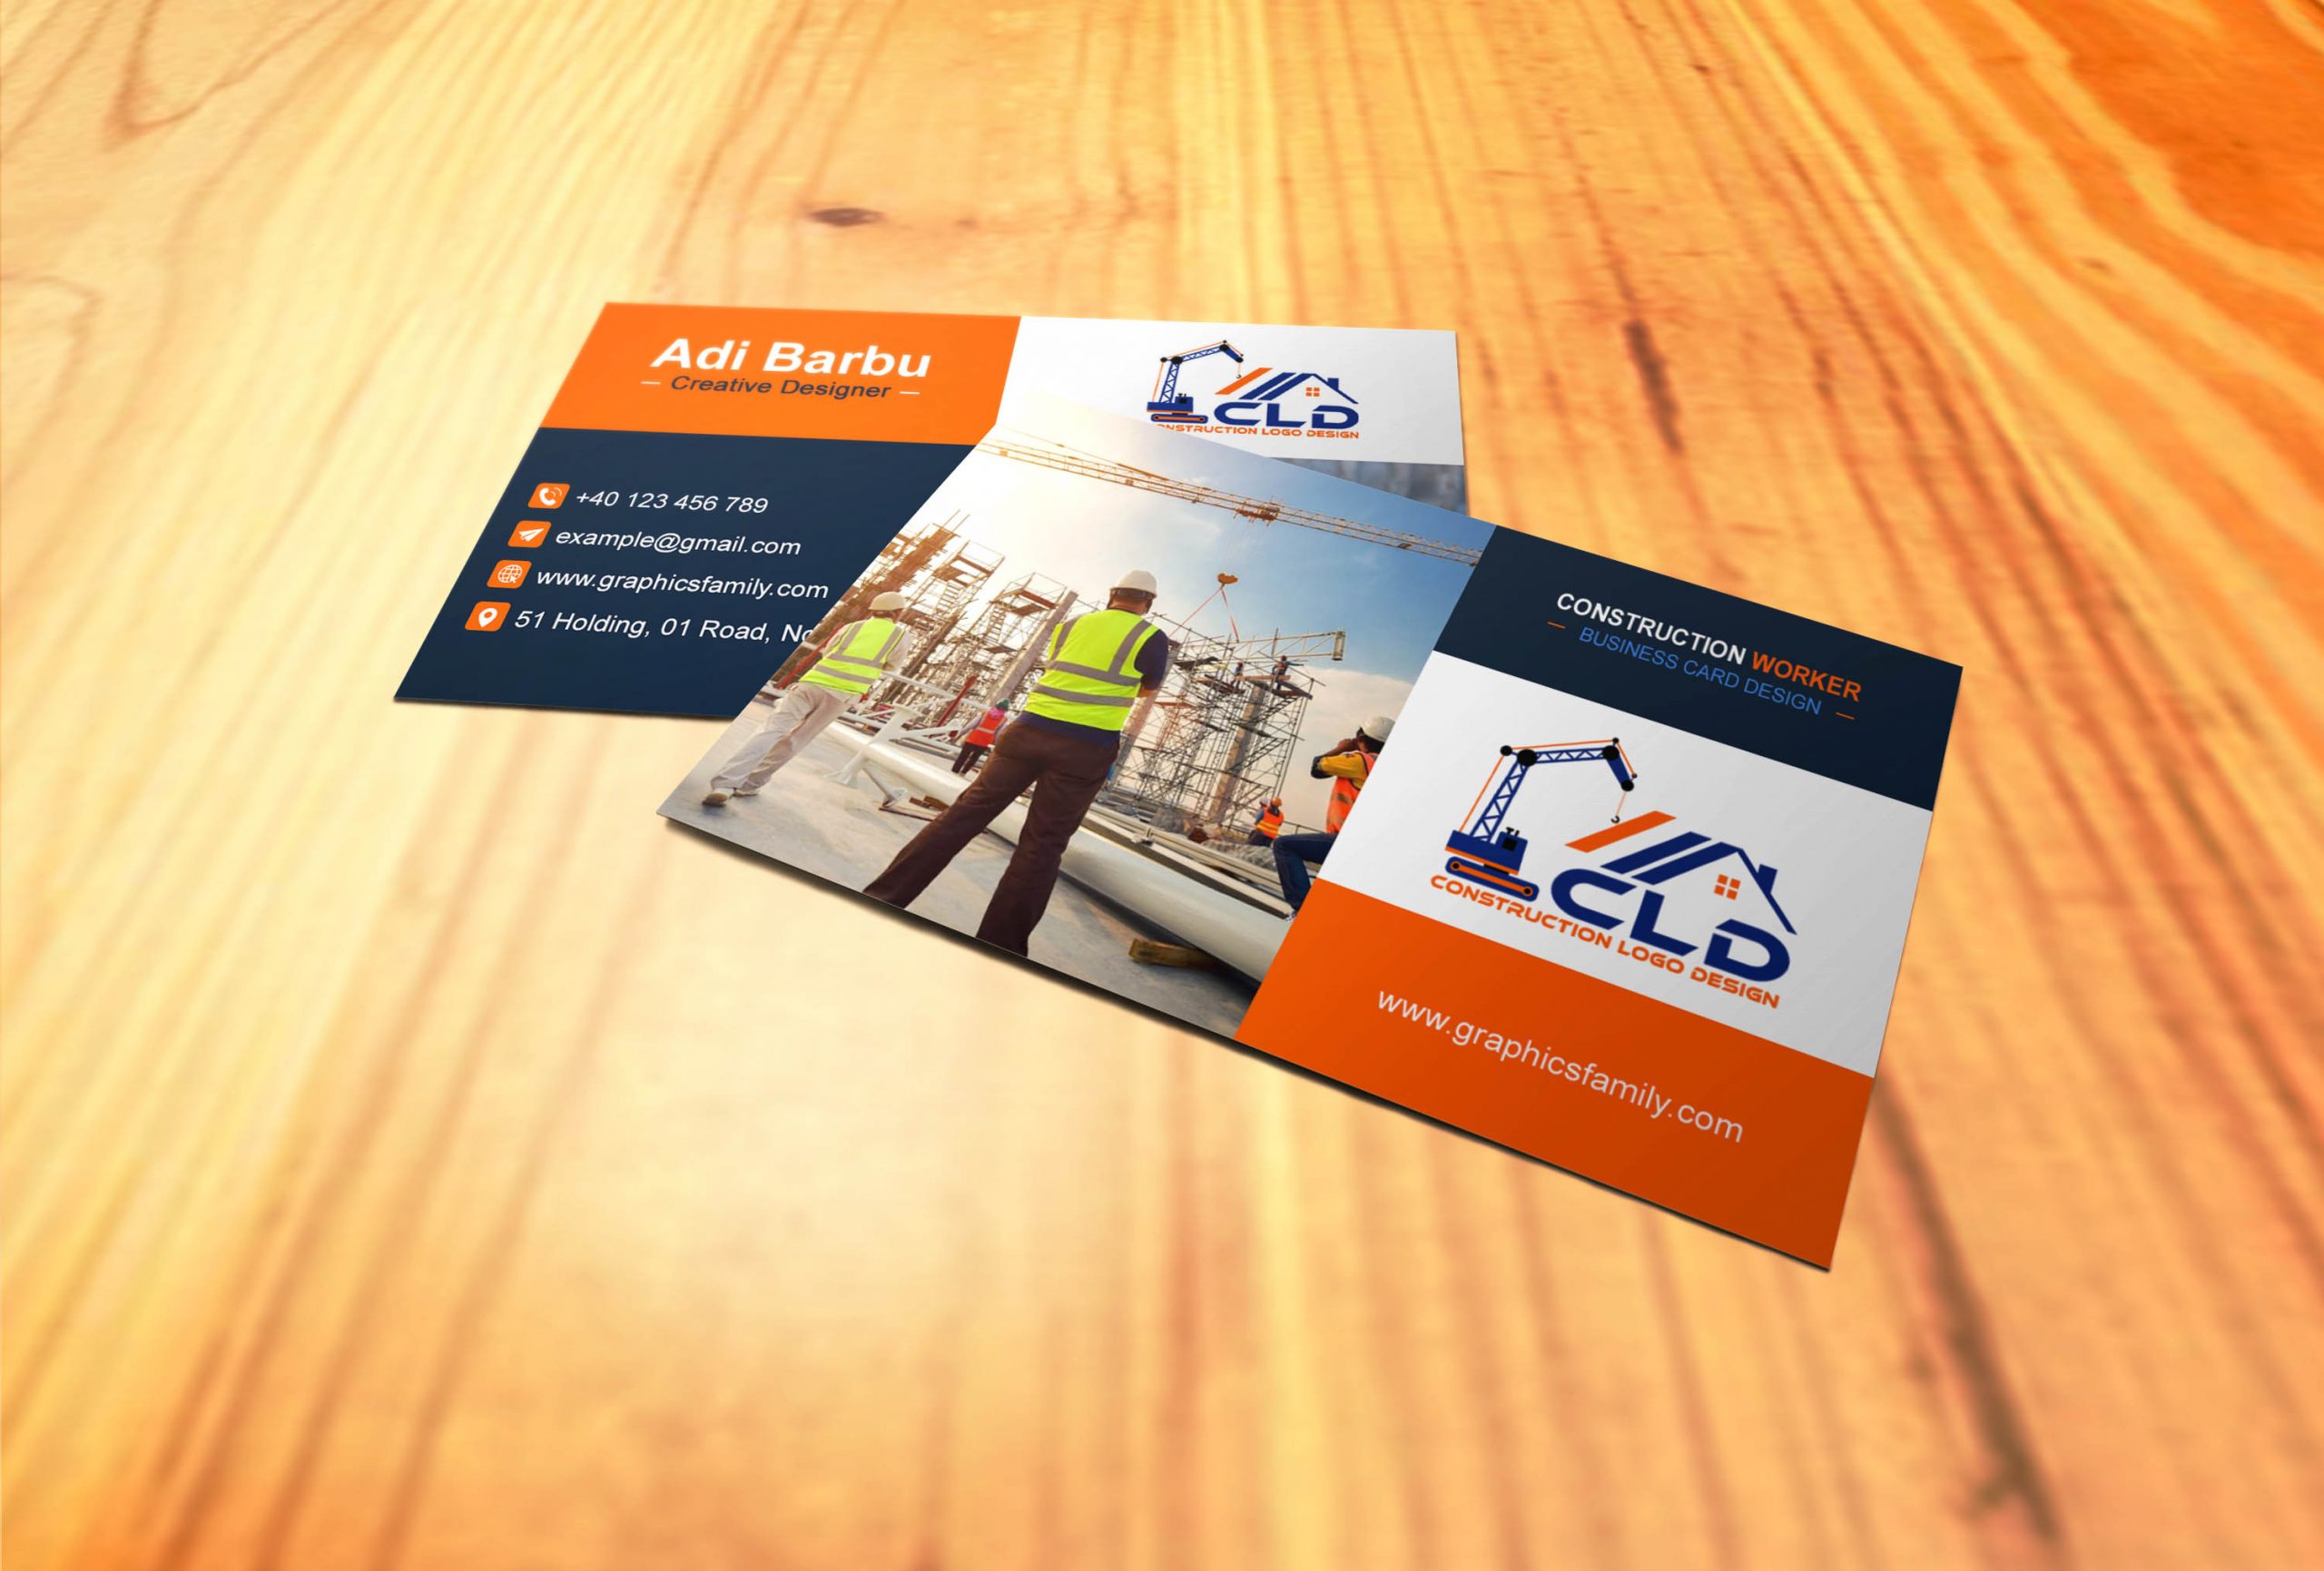 Construction Worker Business Card Design Download